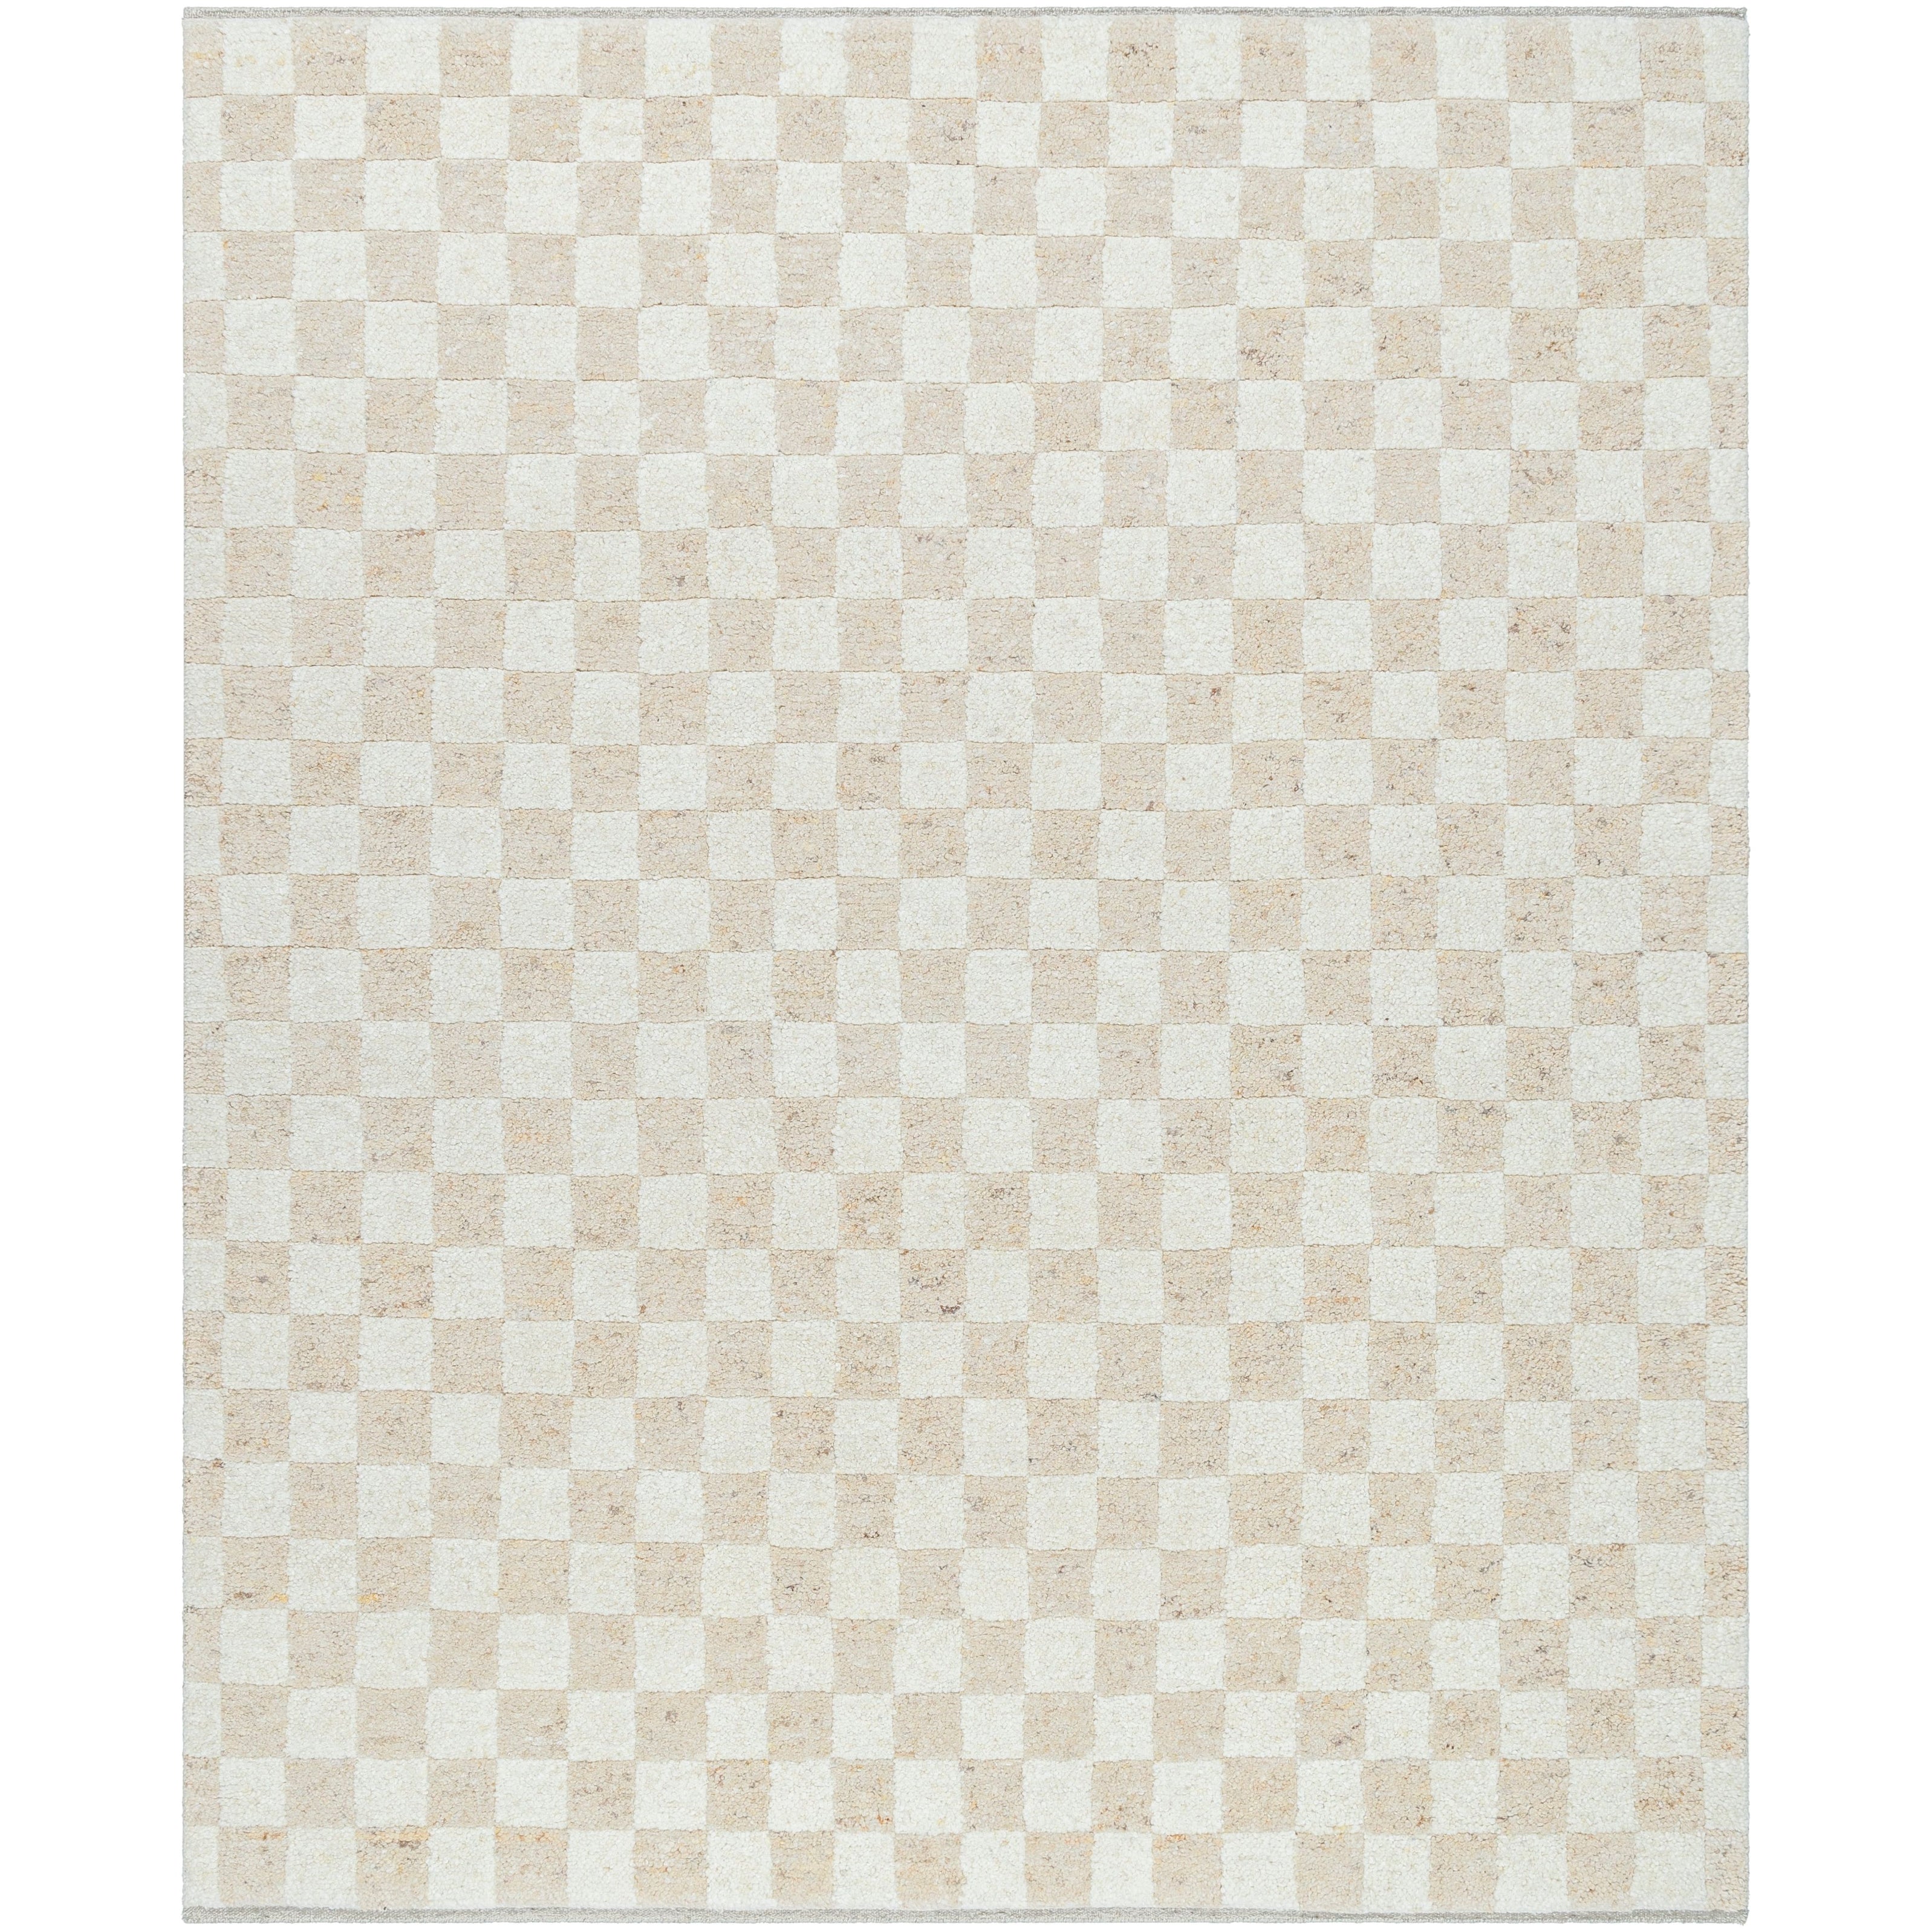 100+] Louis Vuitton Phone Wallpapers